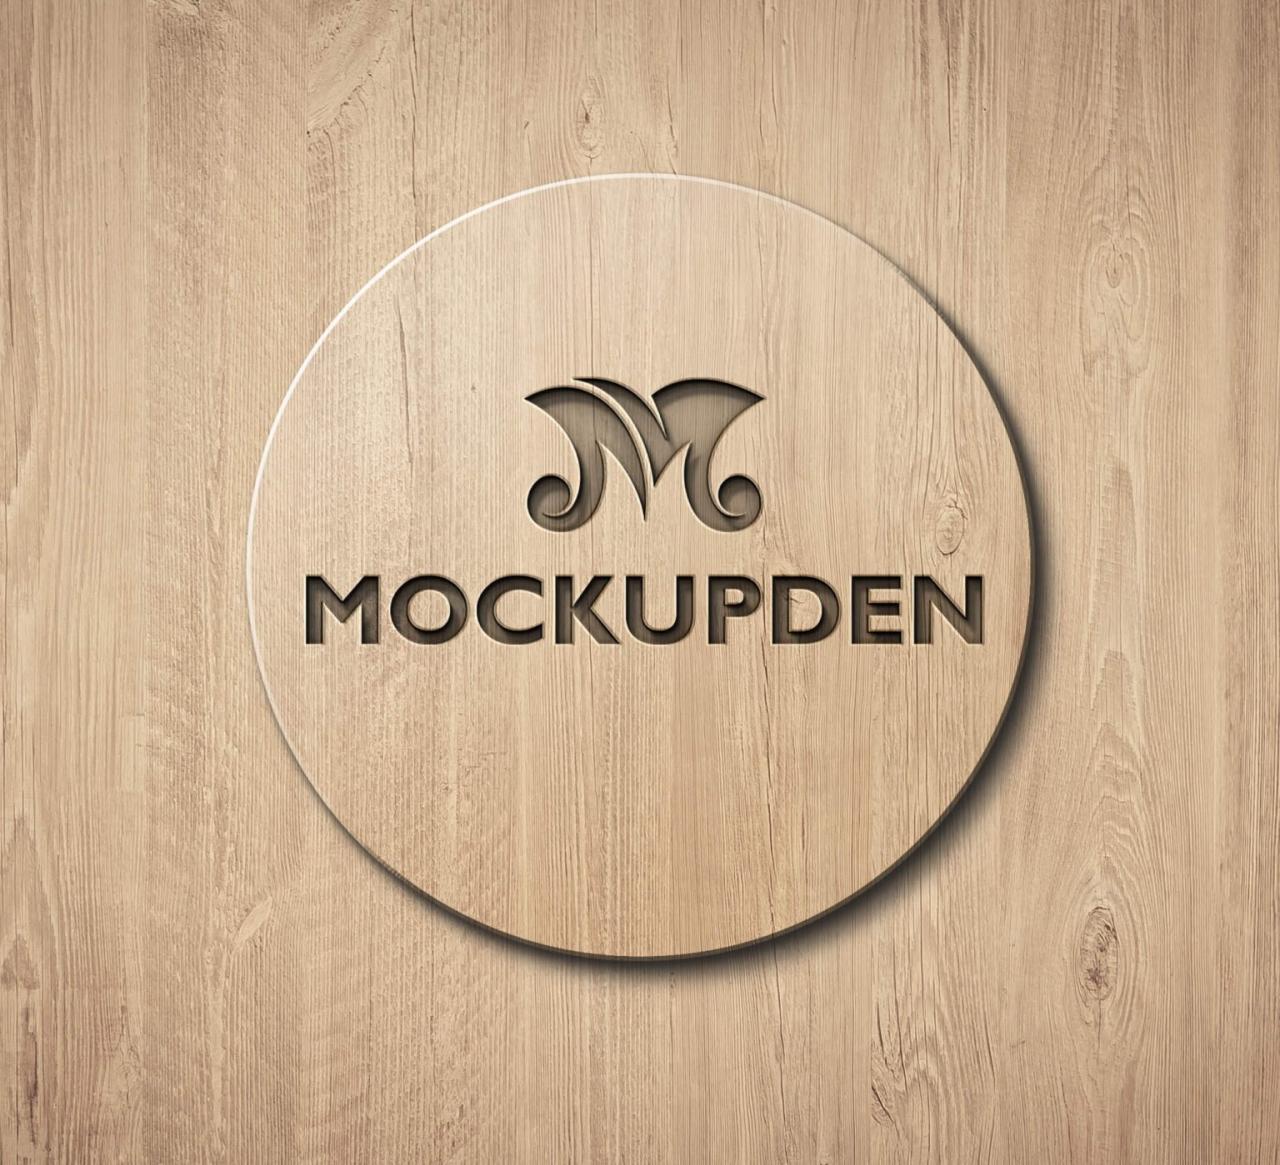 Mockup Free Download